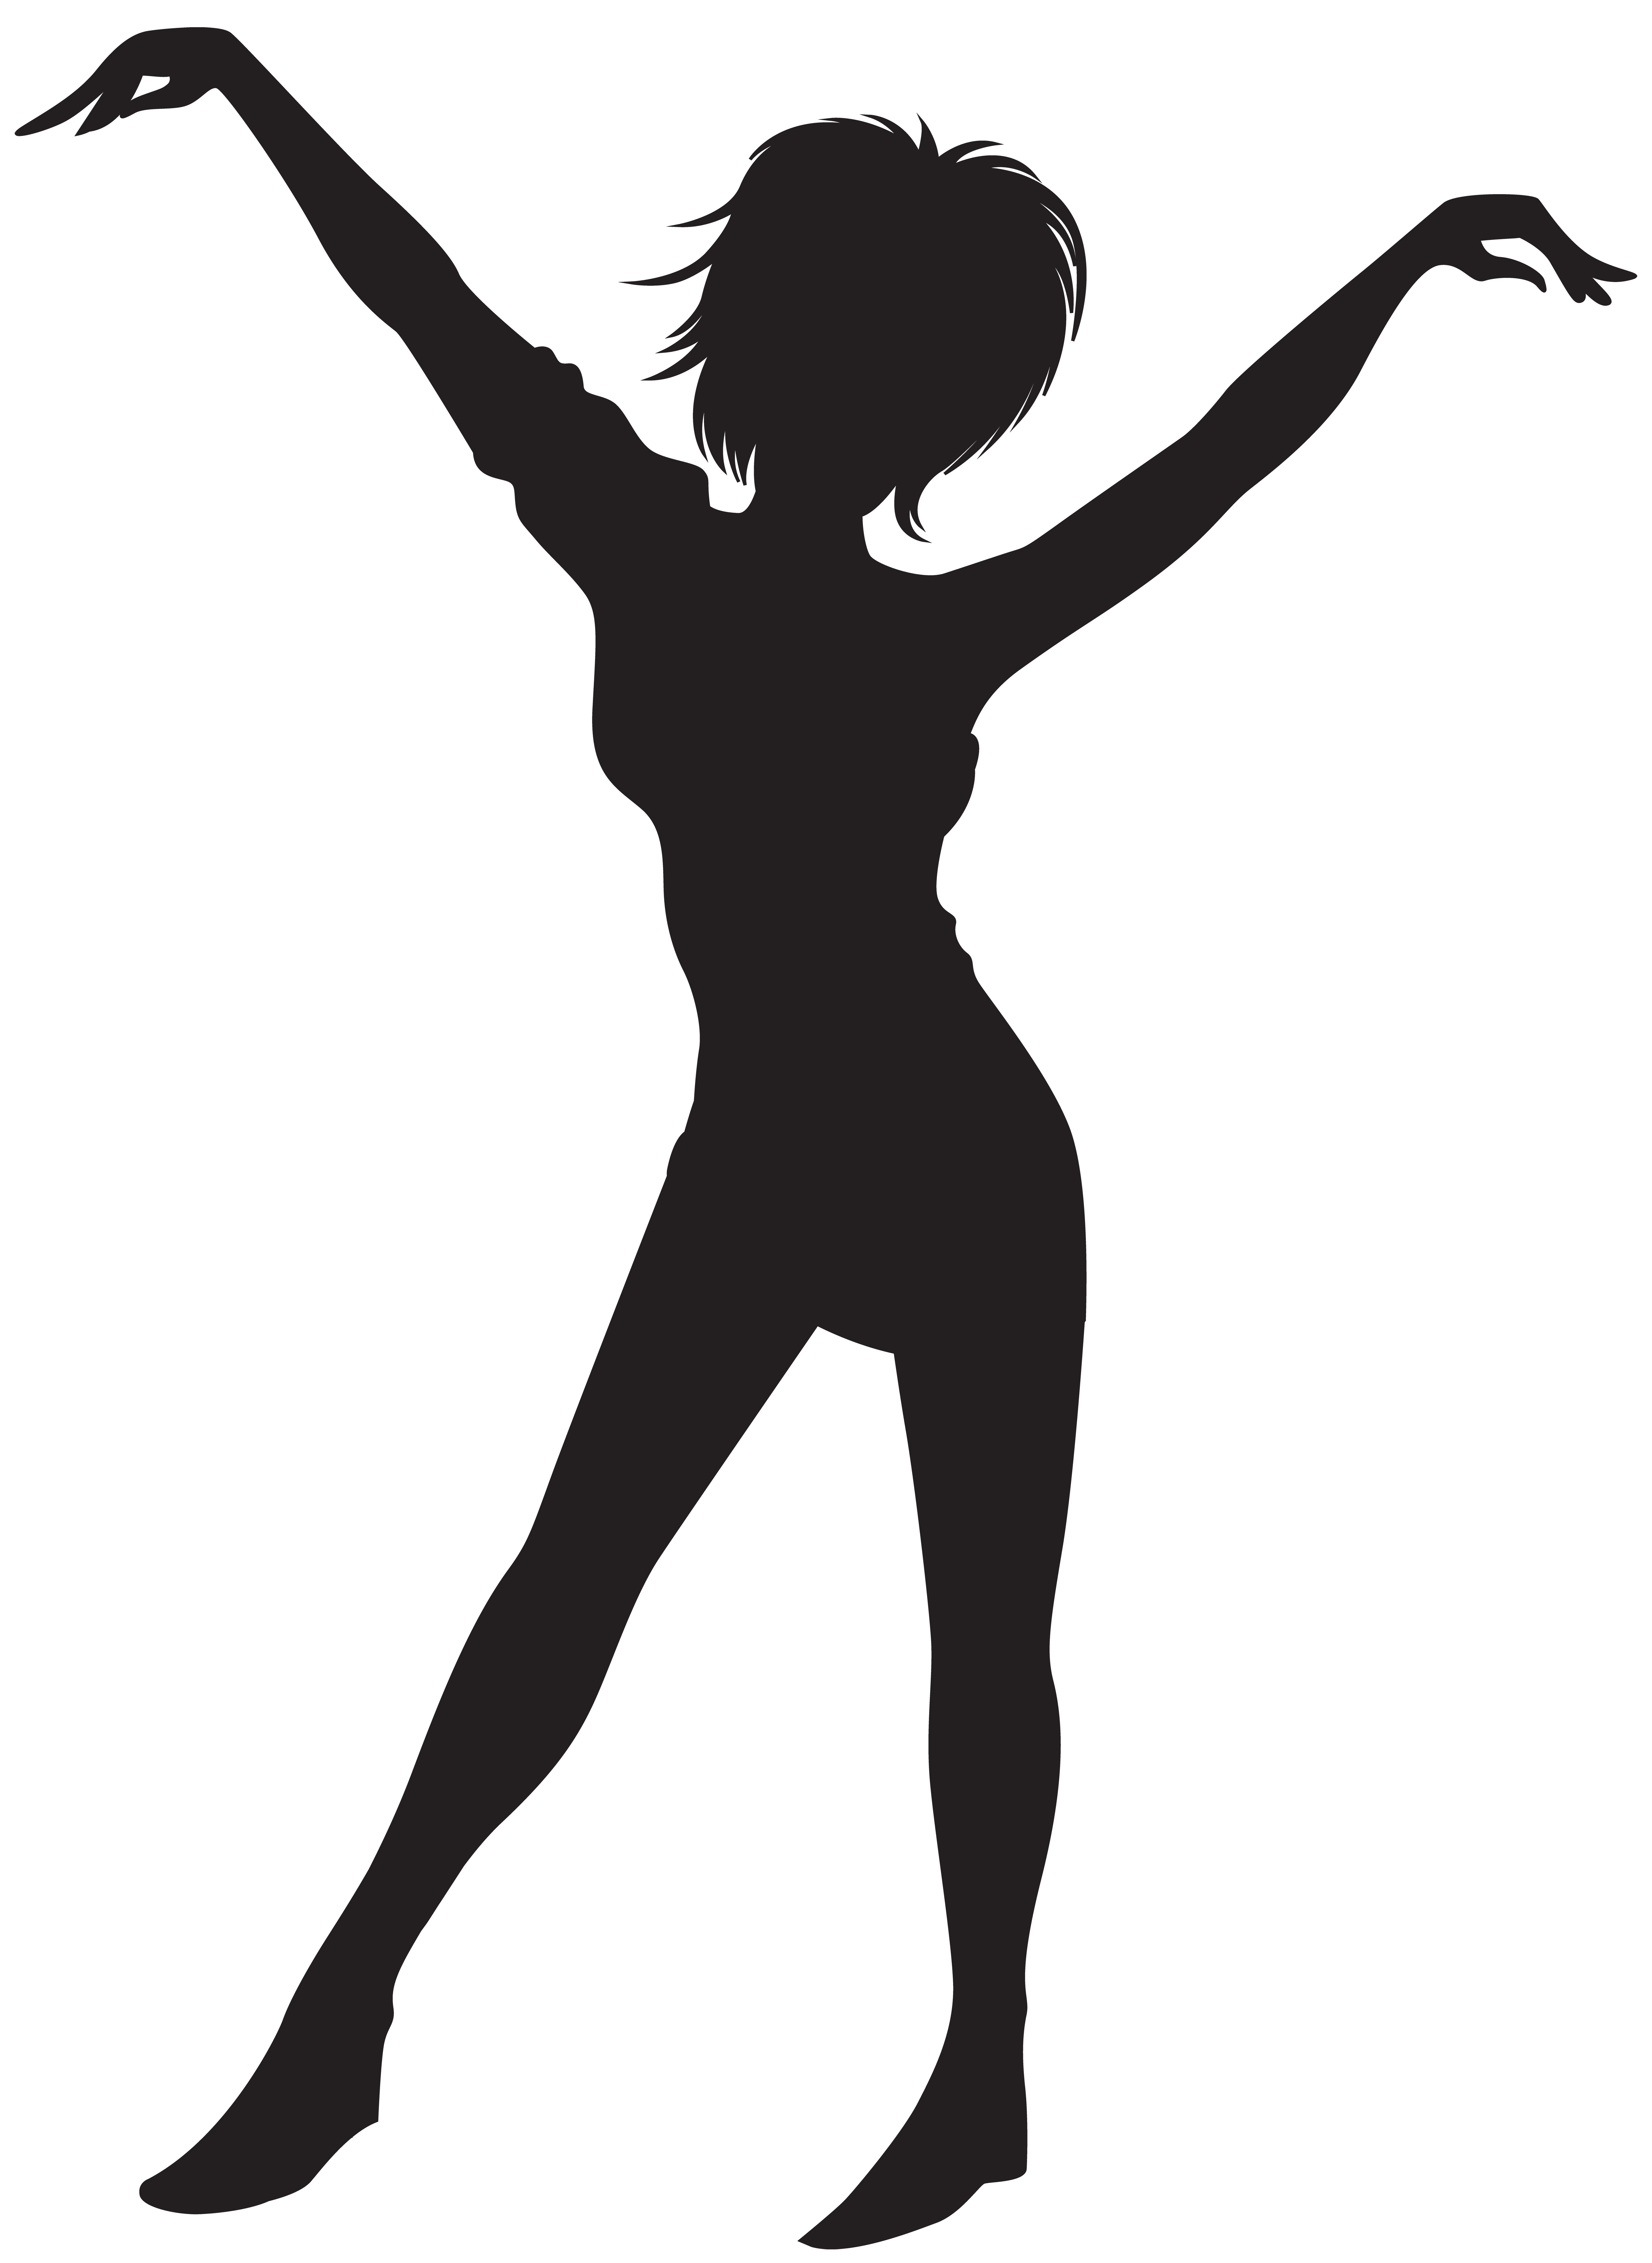 Dancing Girl Silhouette Clip Art PNG Image.